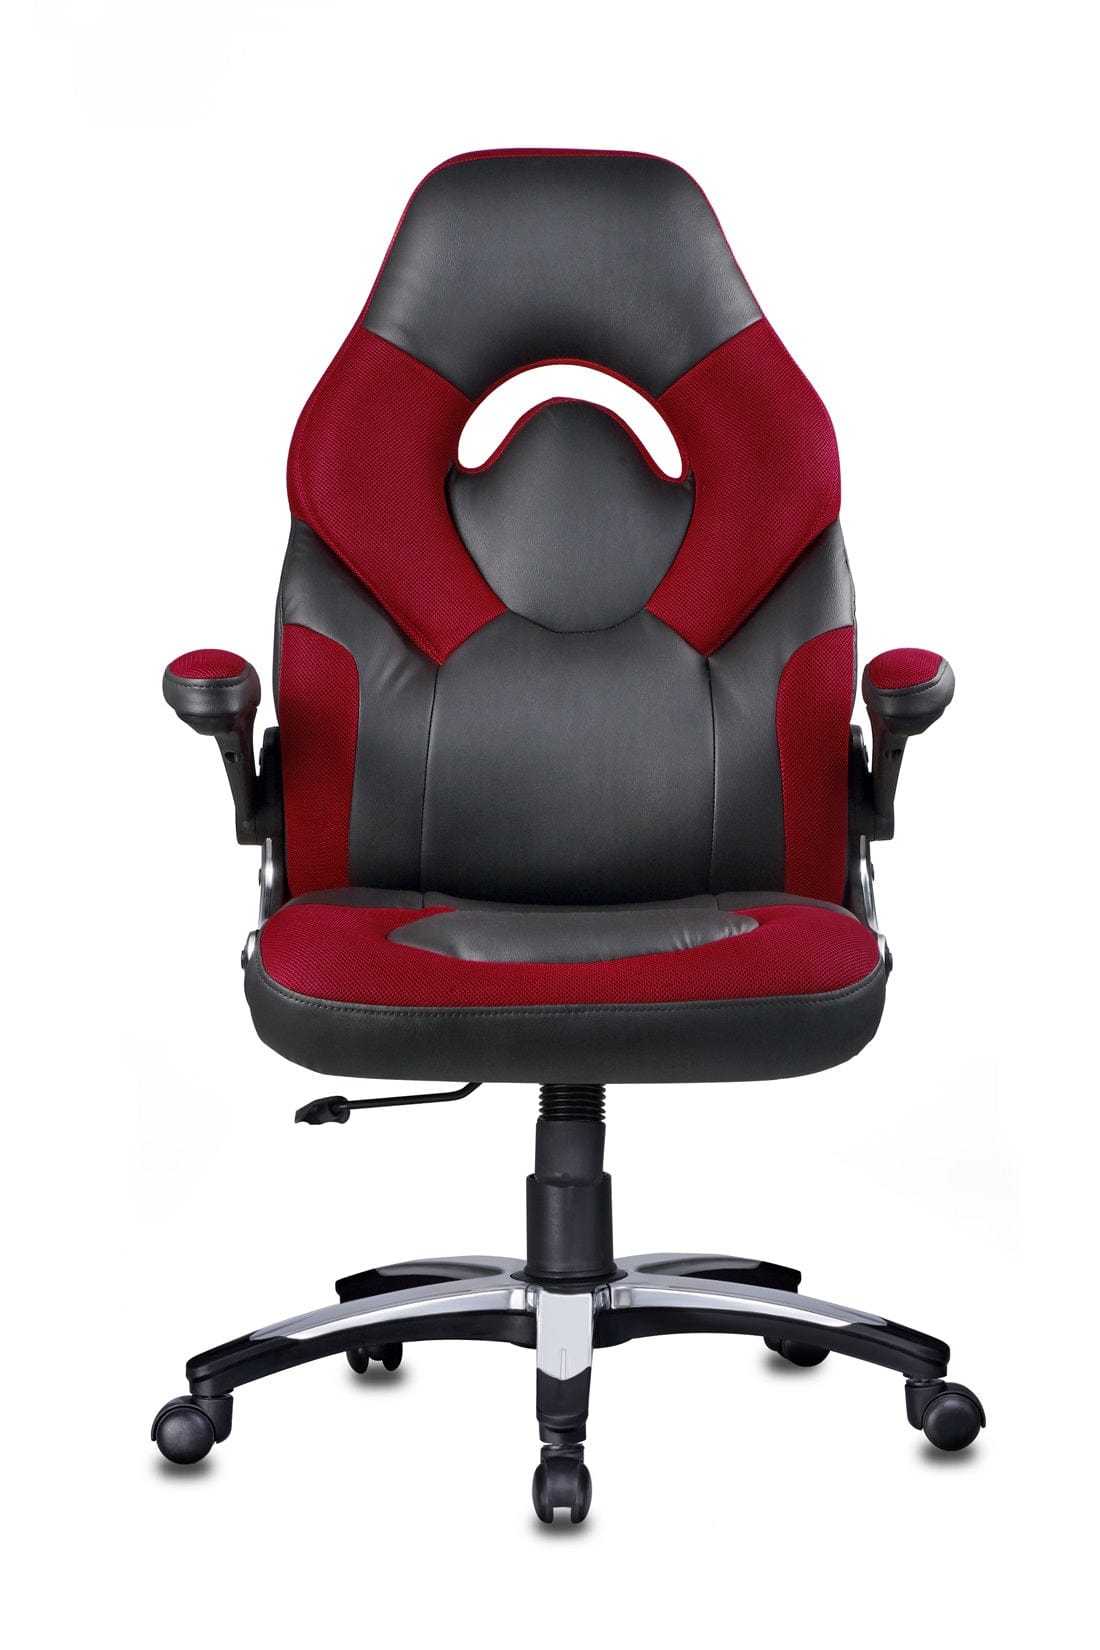 Stylish Designer chair in Black / Red